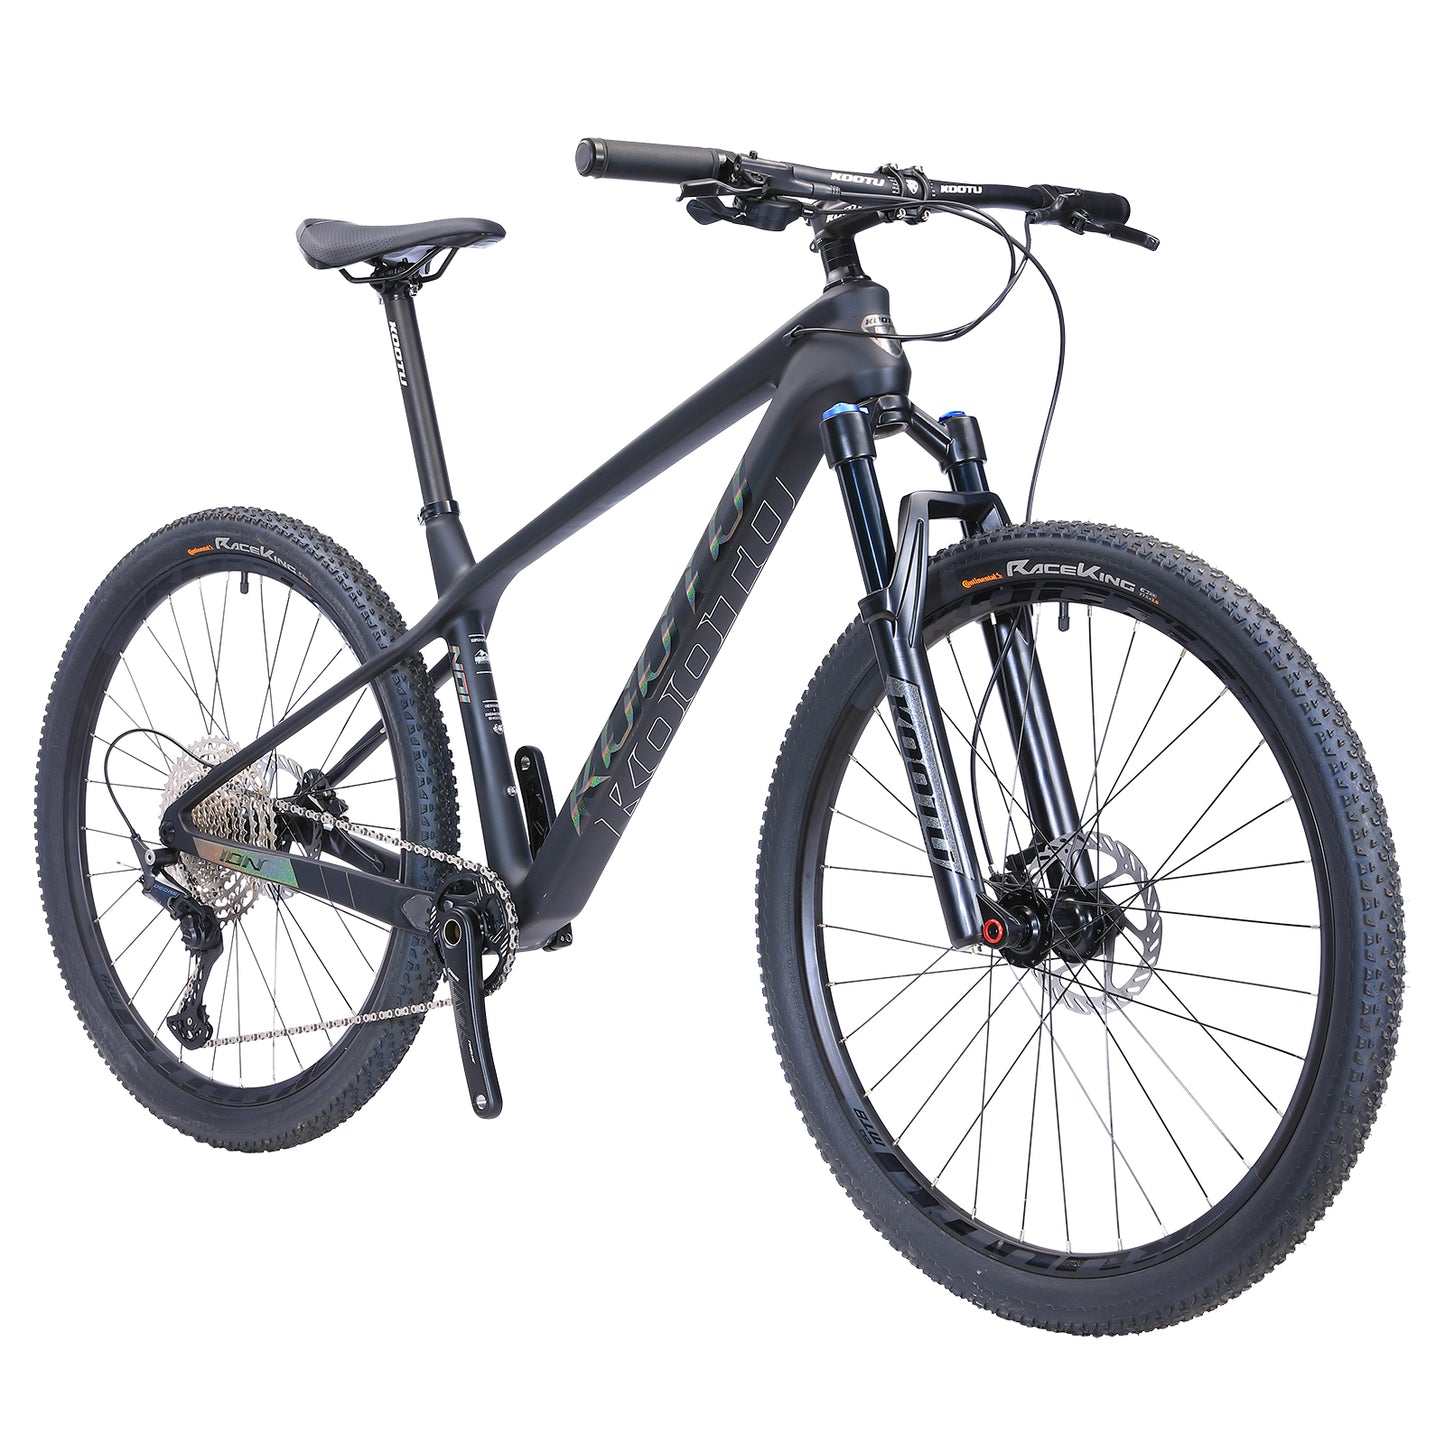 KOOTU Carbon Mountain Bike Hardtail MTB SHIMANO M6100 12 Speed-Black